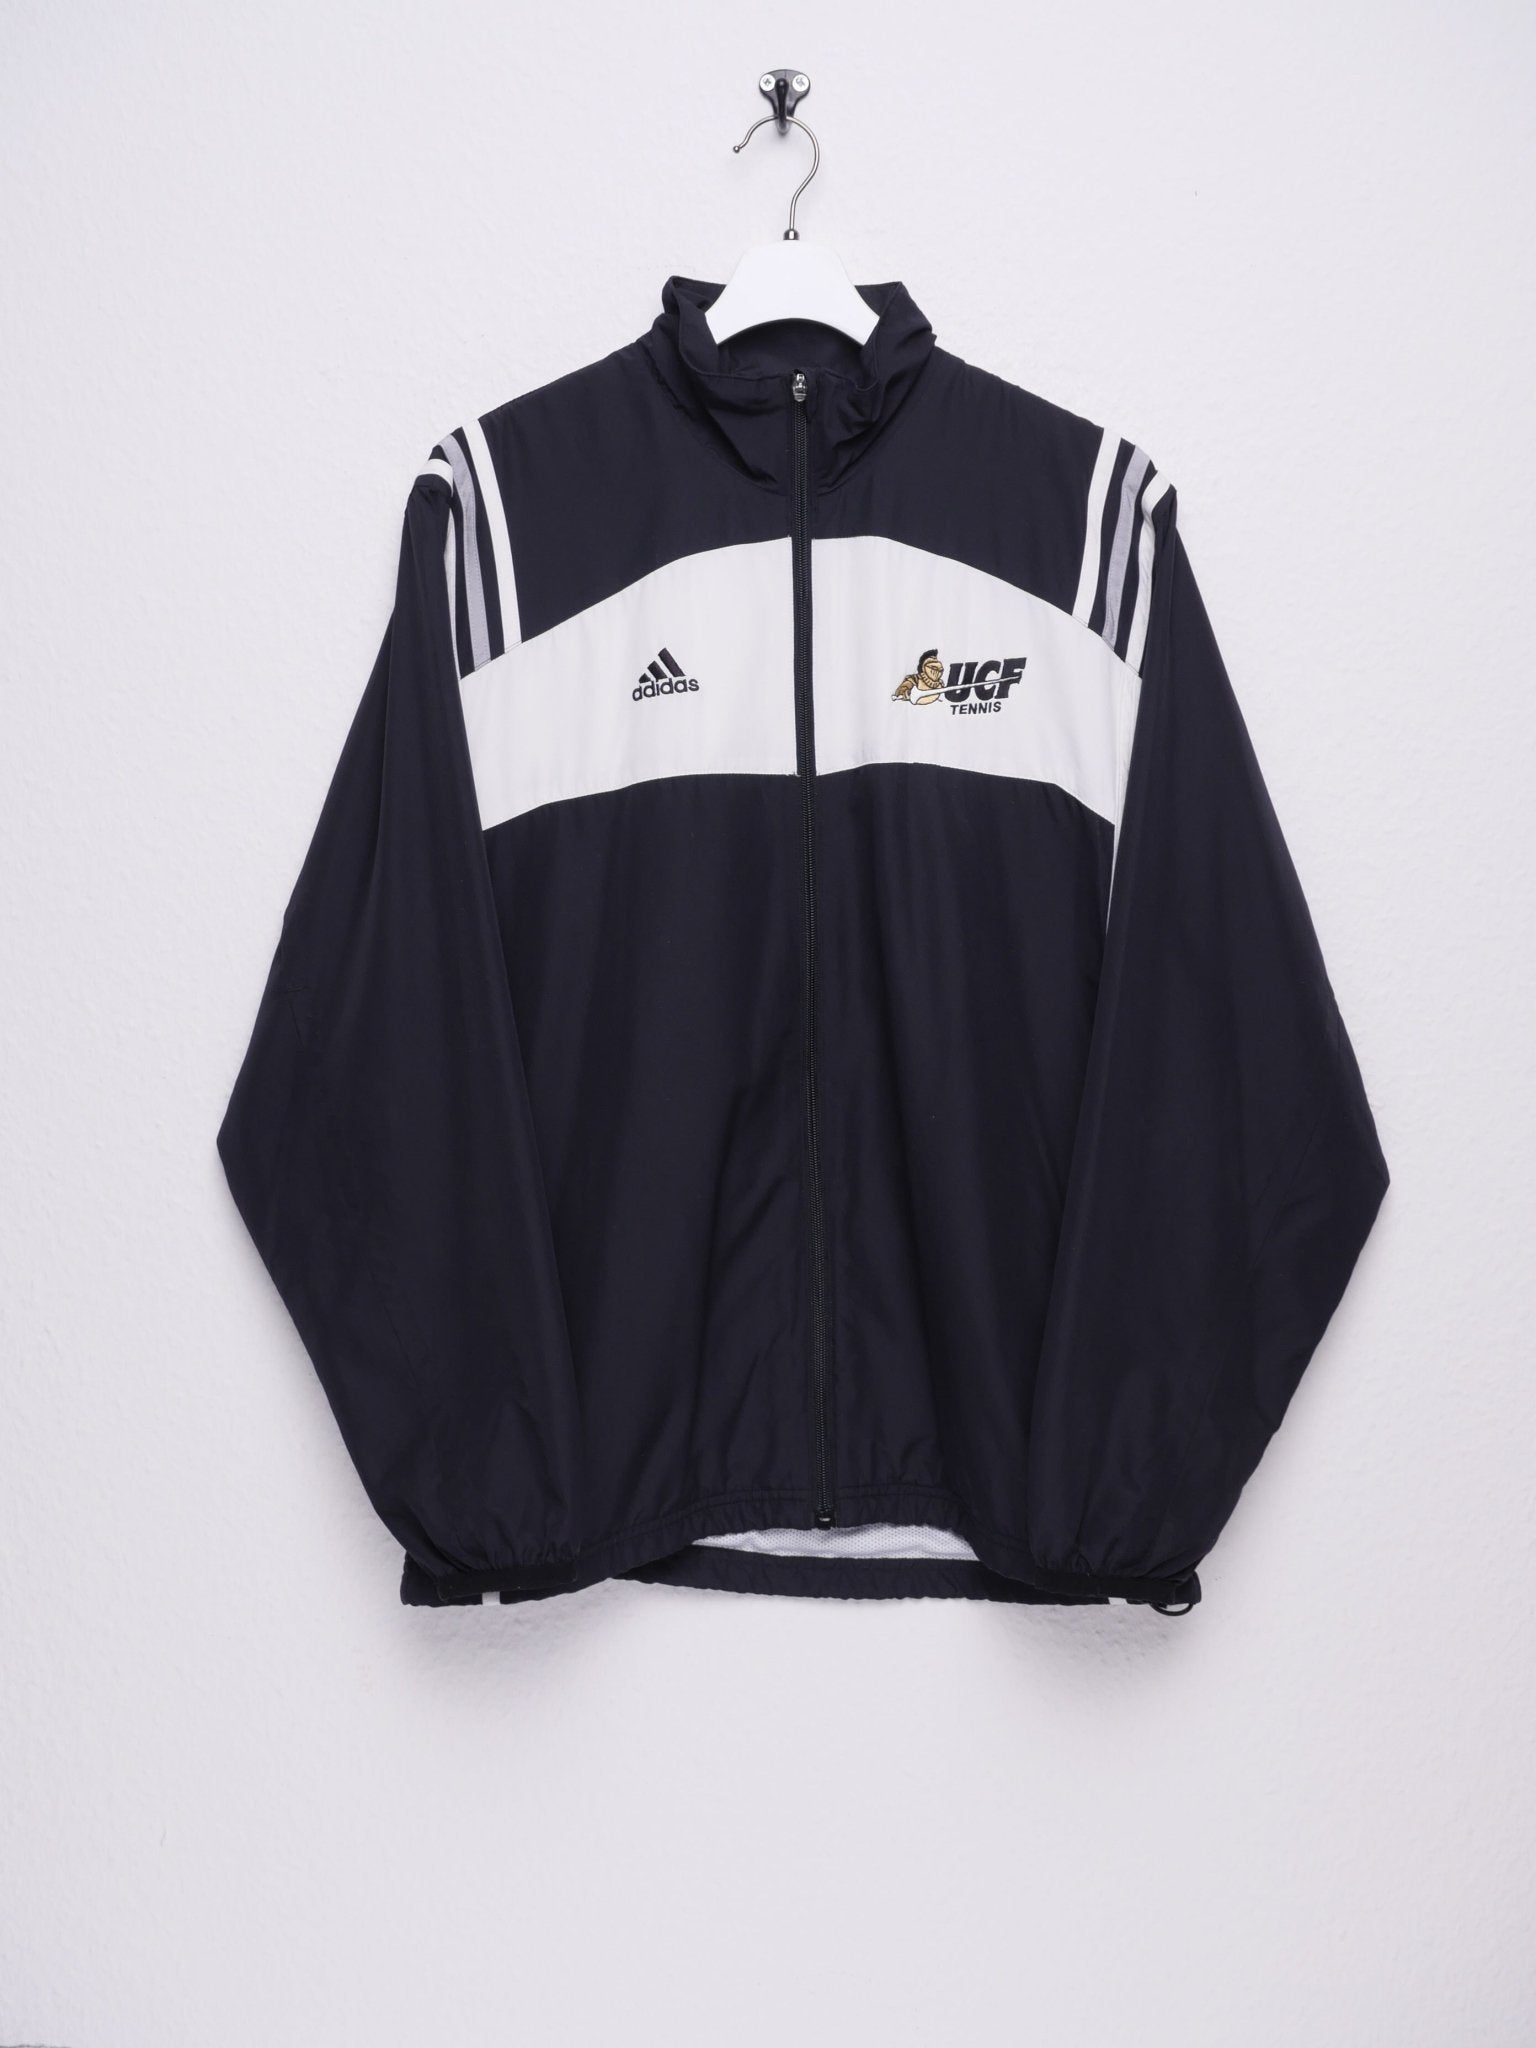 Adidas embroidered Logo 'UCF Tennis' Track Jacket - Peeces